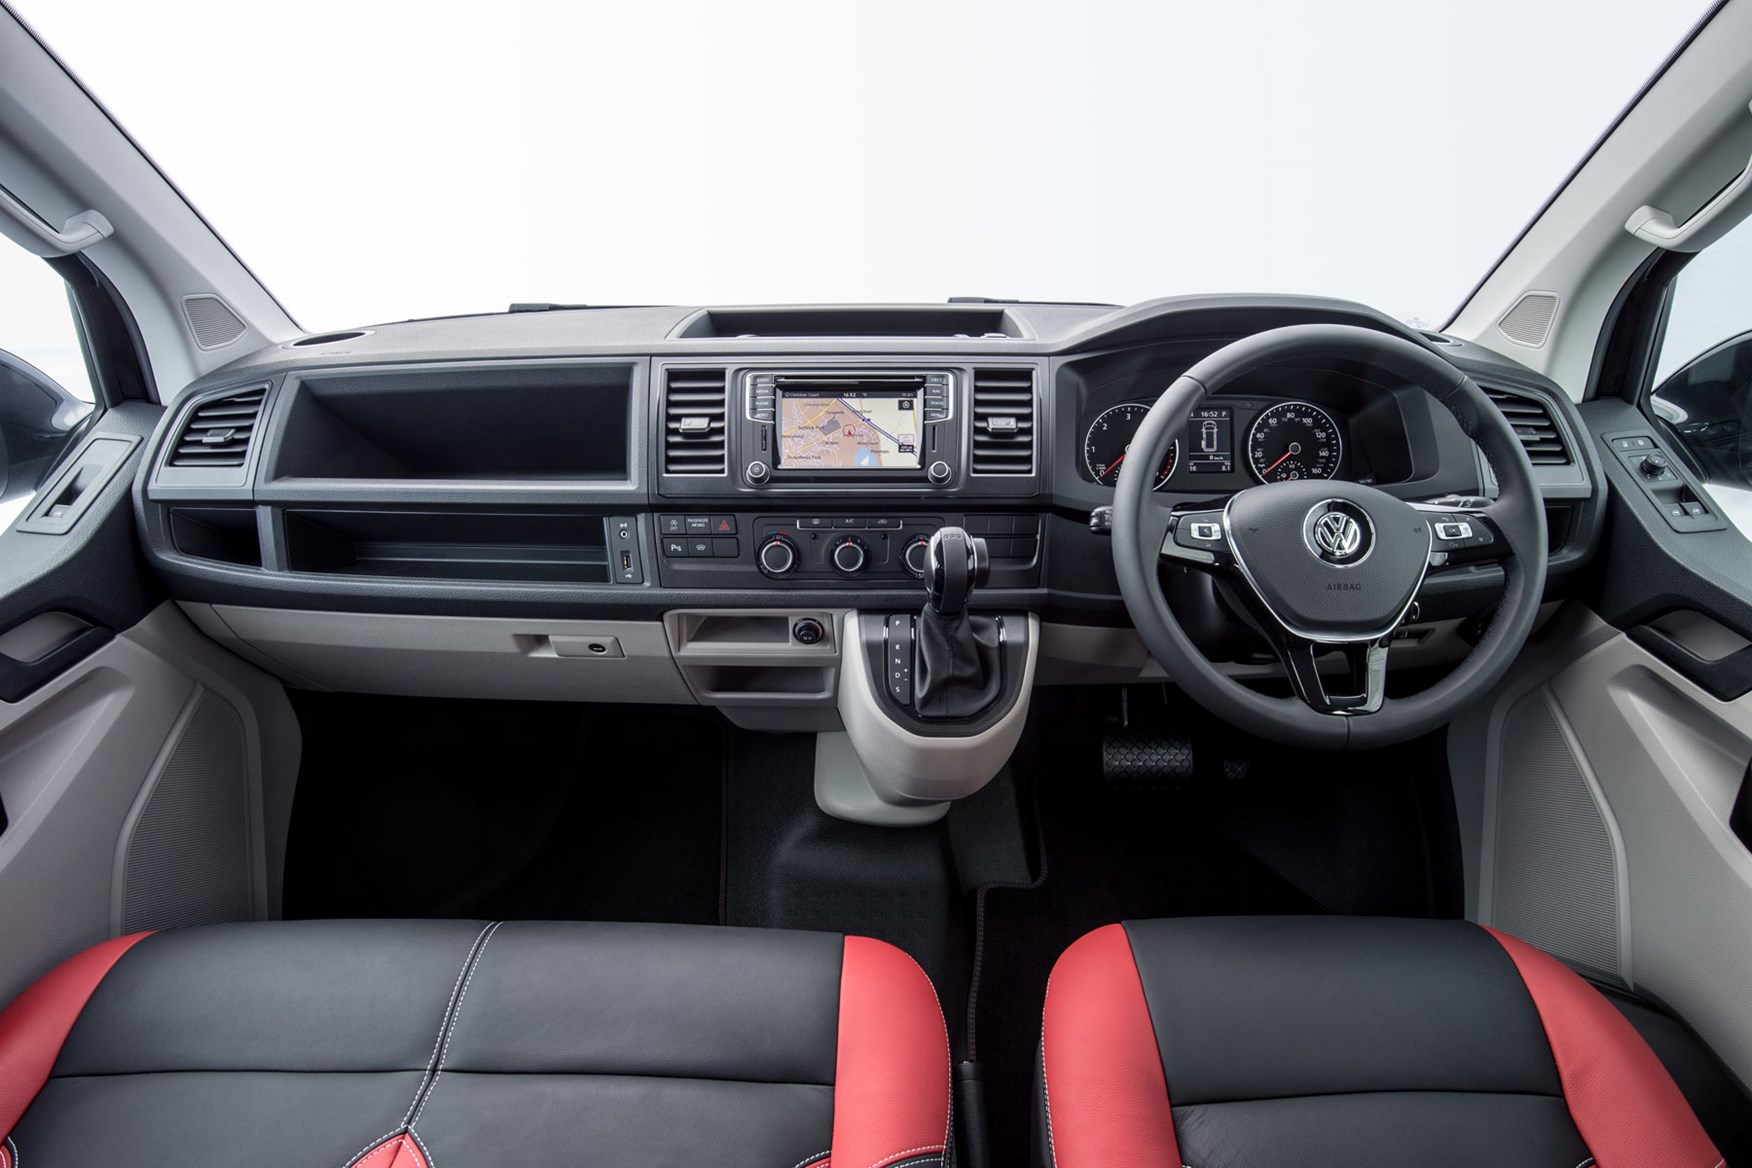 VW Transporter (2015-on) cab interior